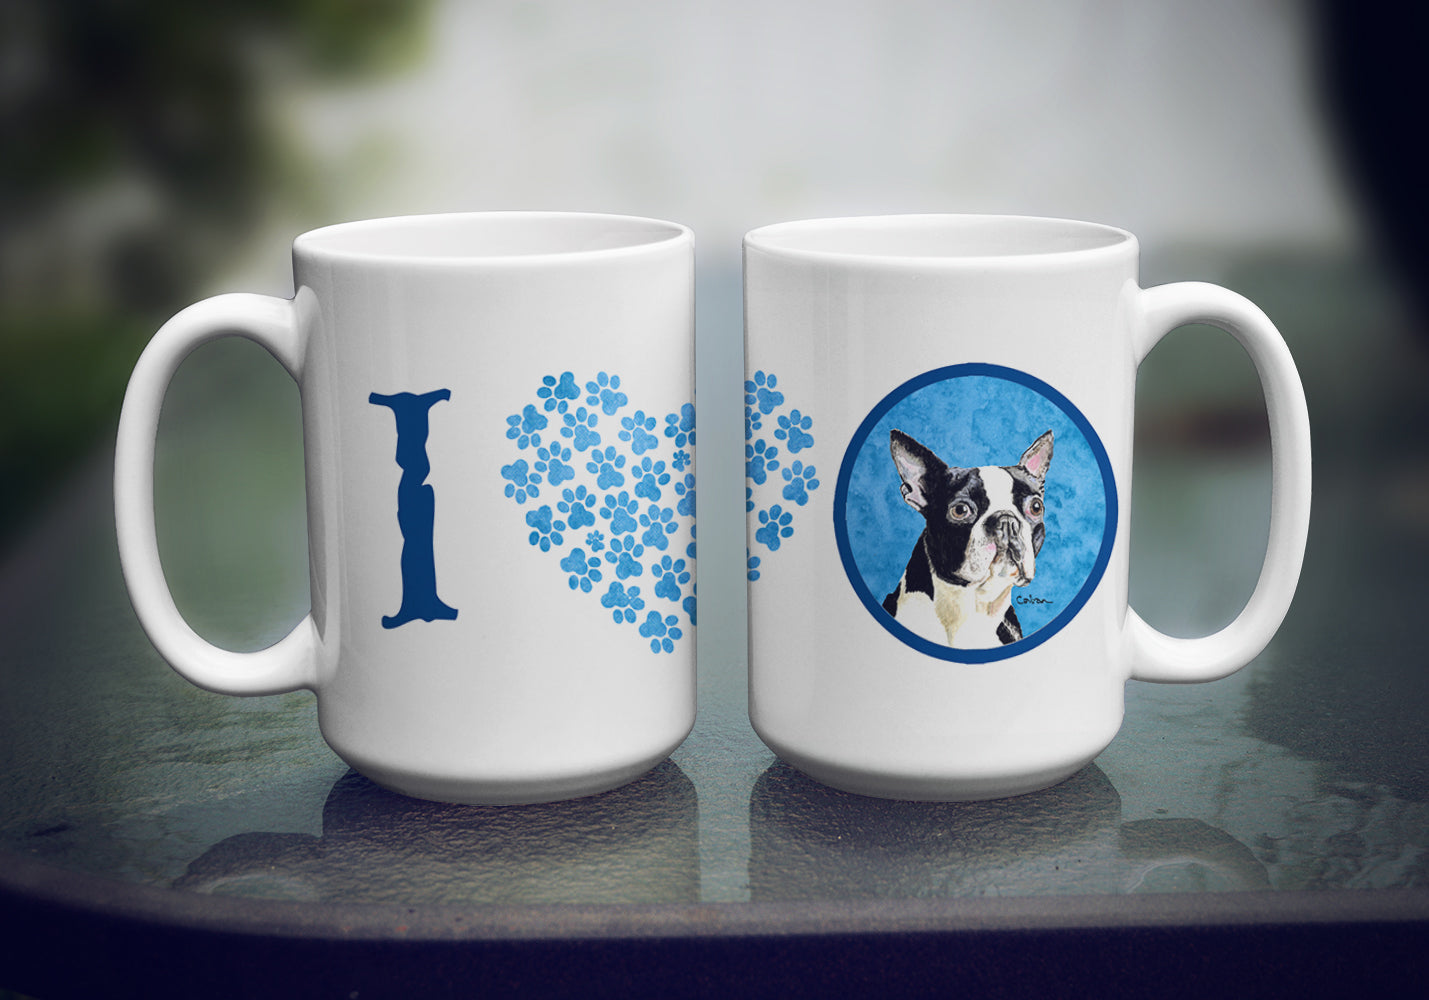 Boston Terrier Dishwasher Safe Microwavable Ceramic Coffee Mug 15 ounce